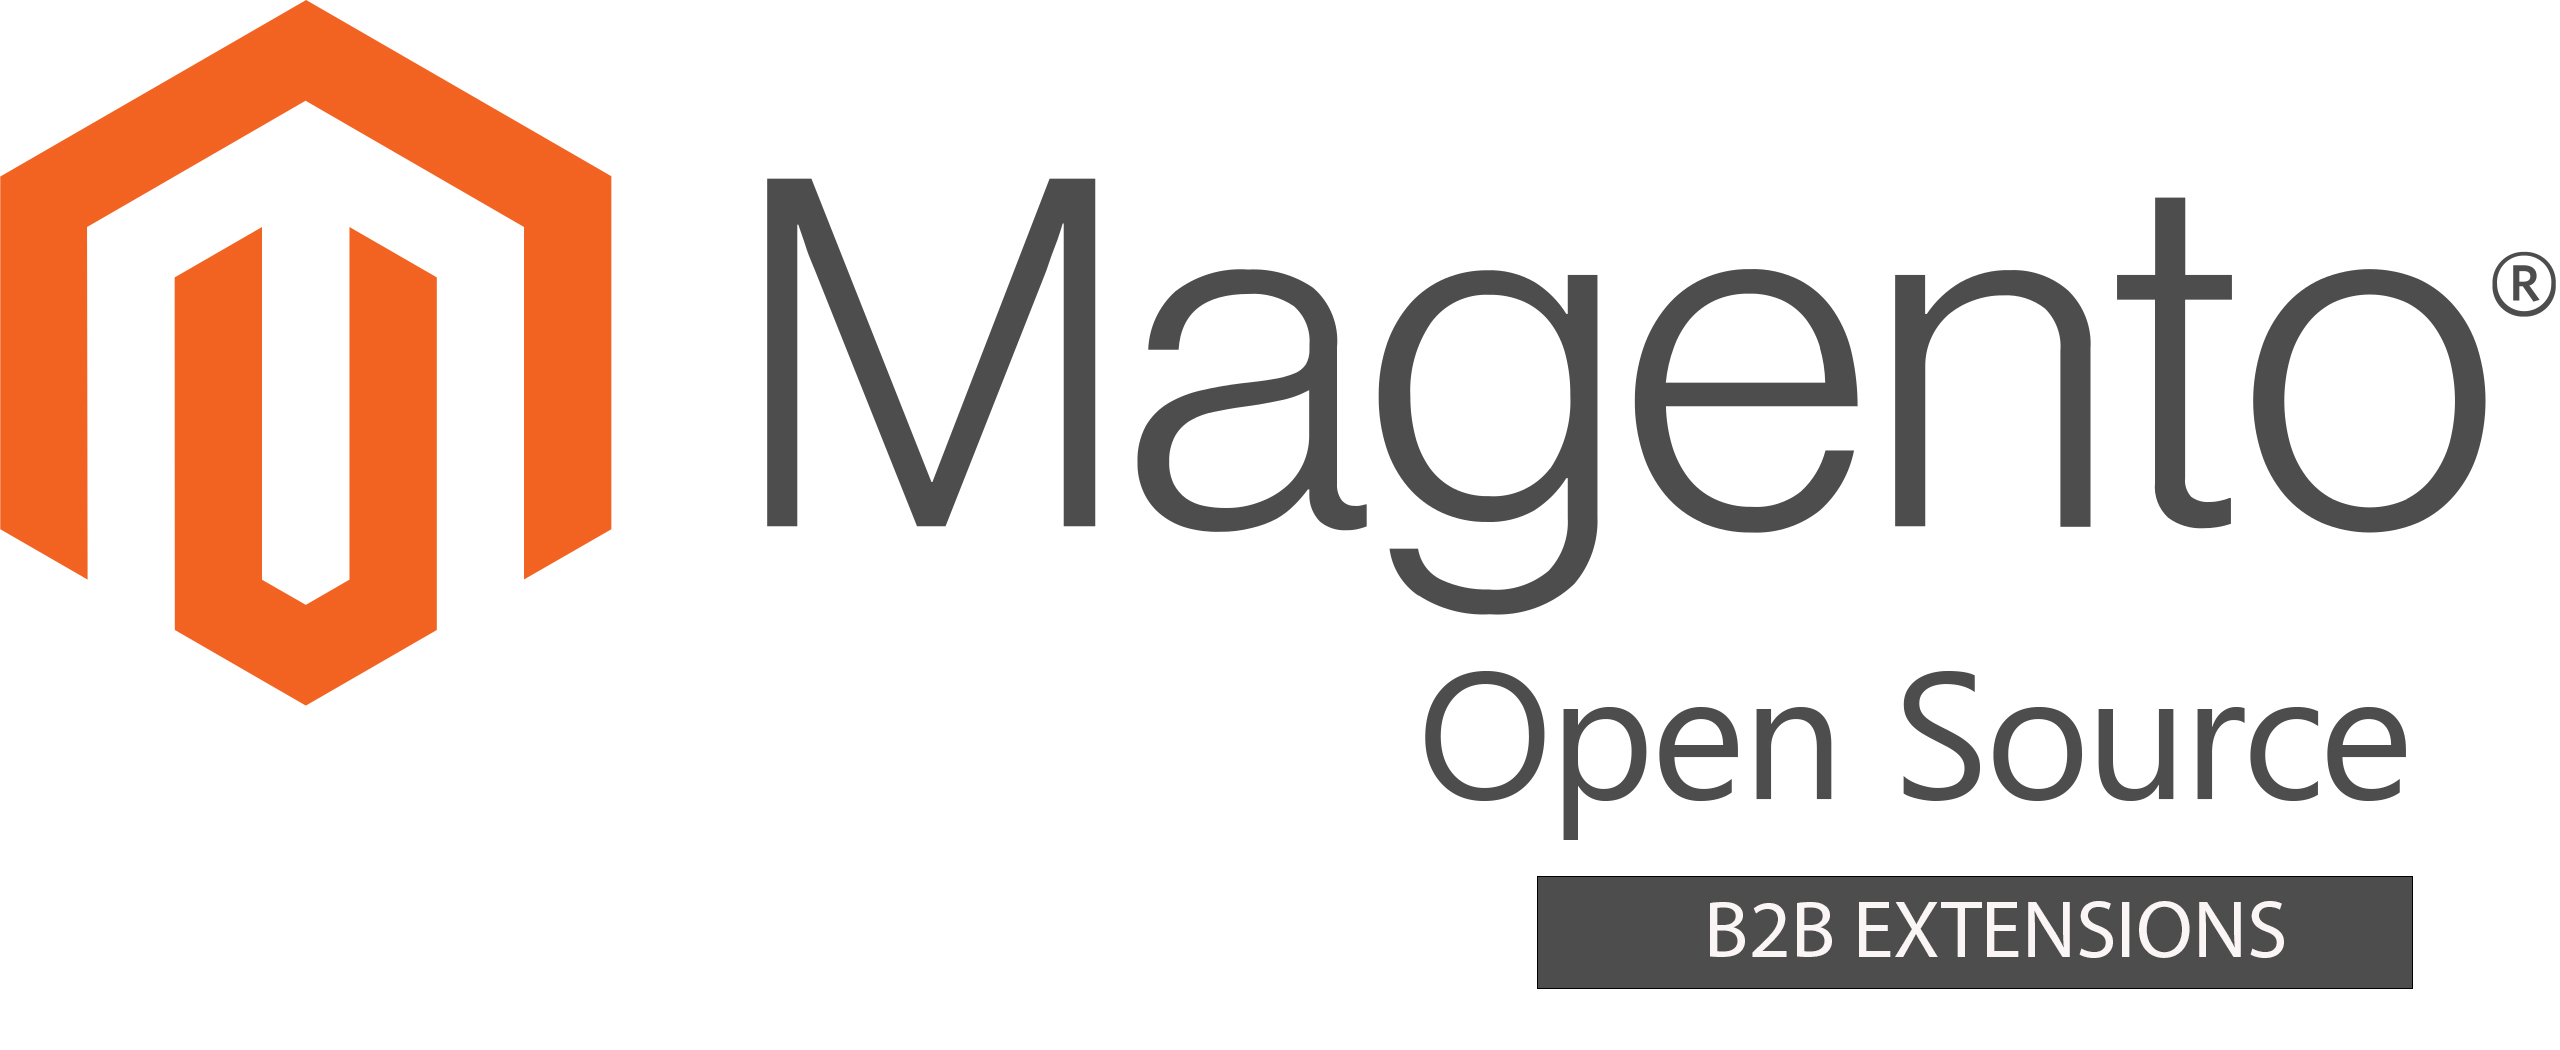 Tinx Magento Open Source B2B Extensions Logo